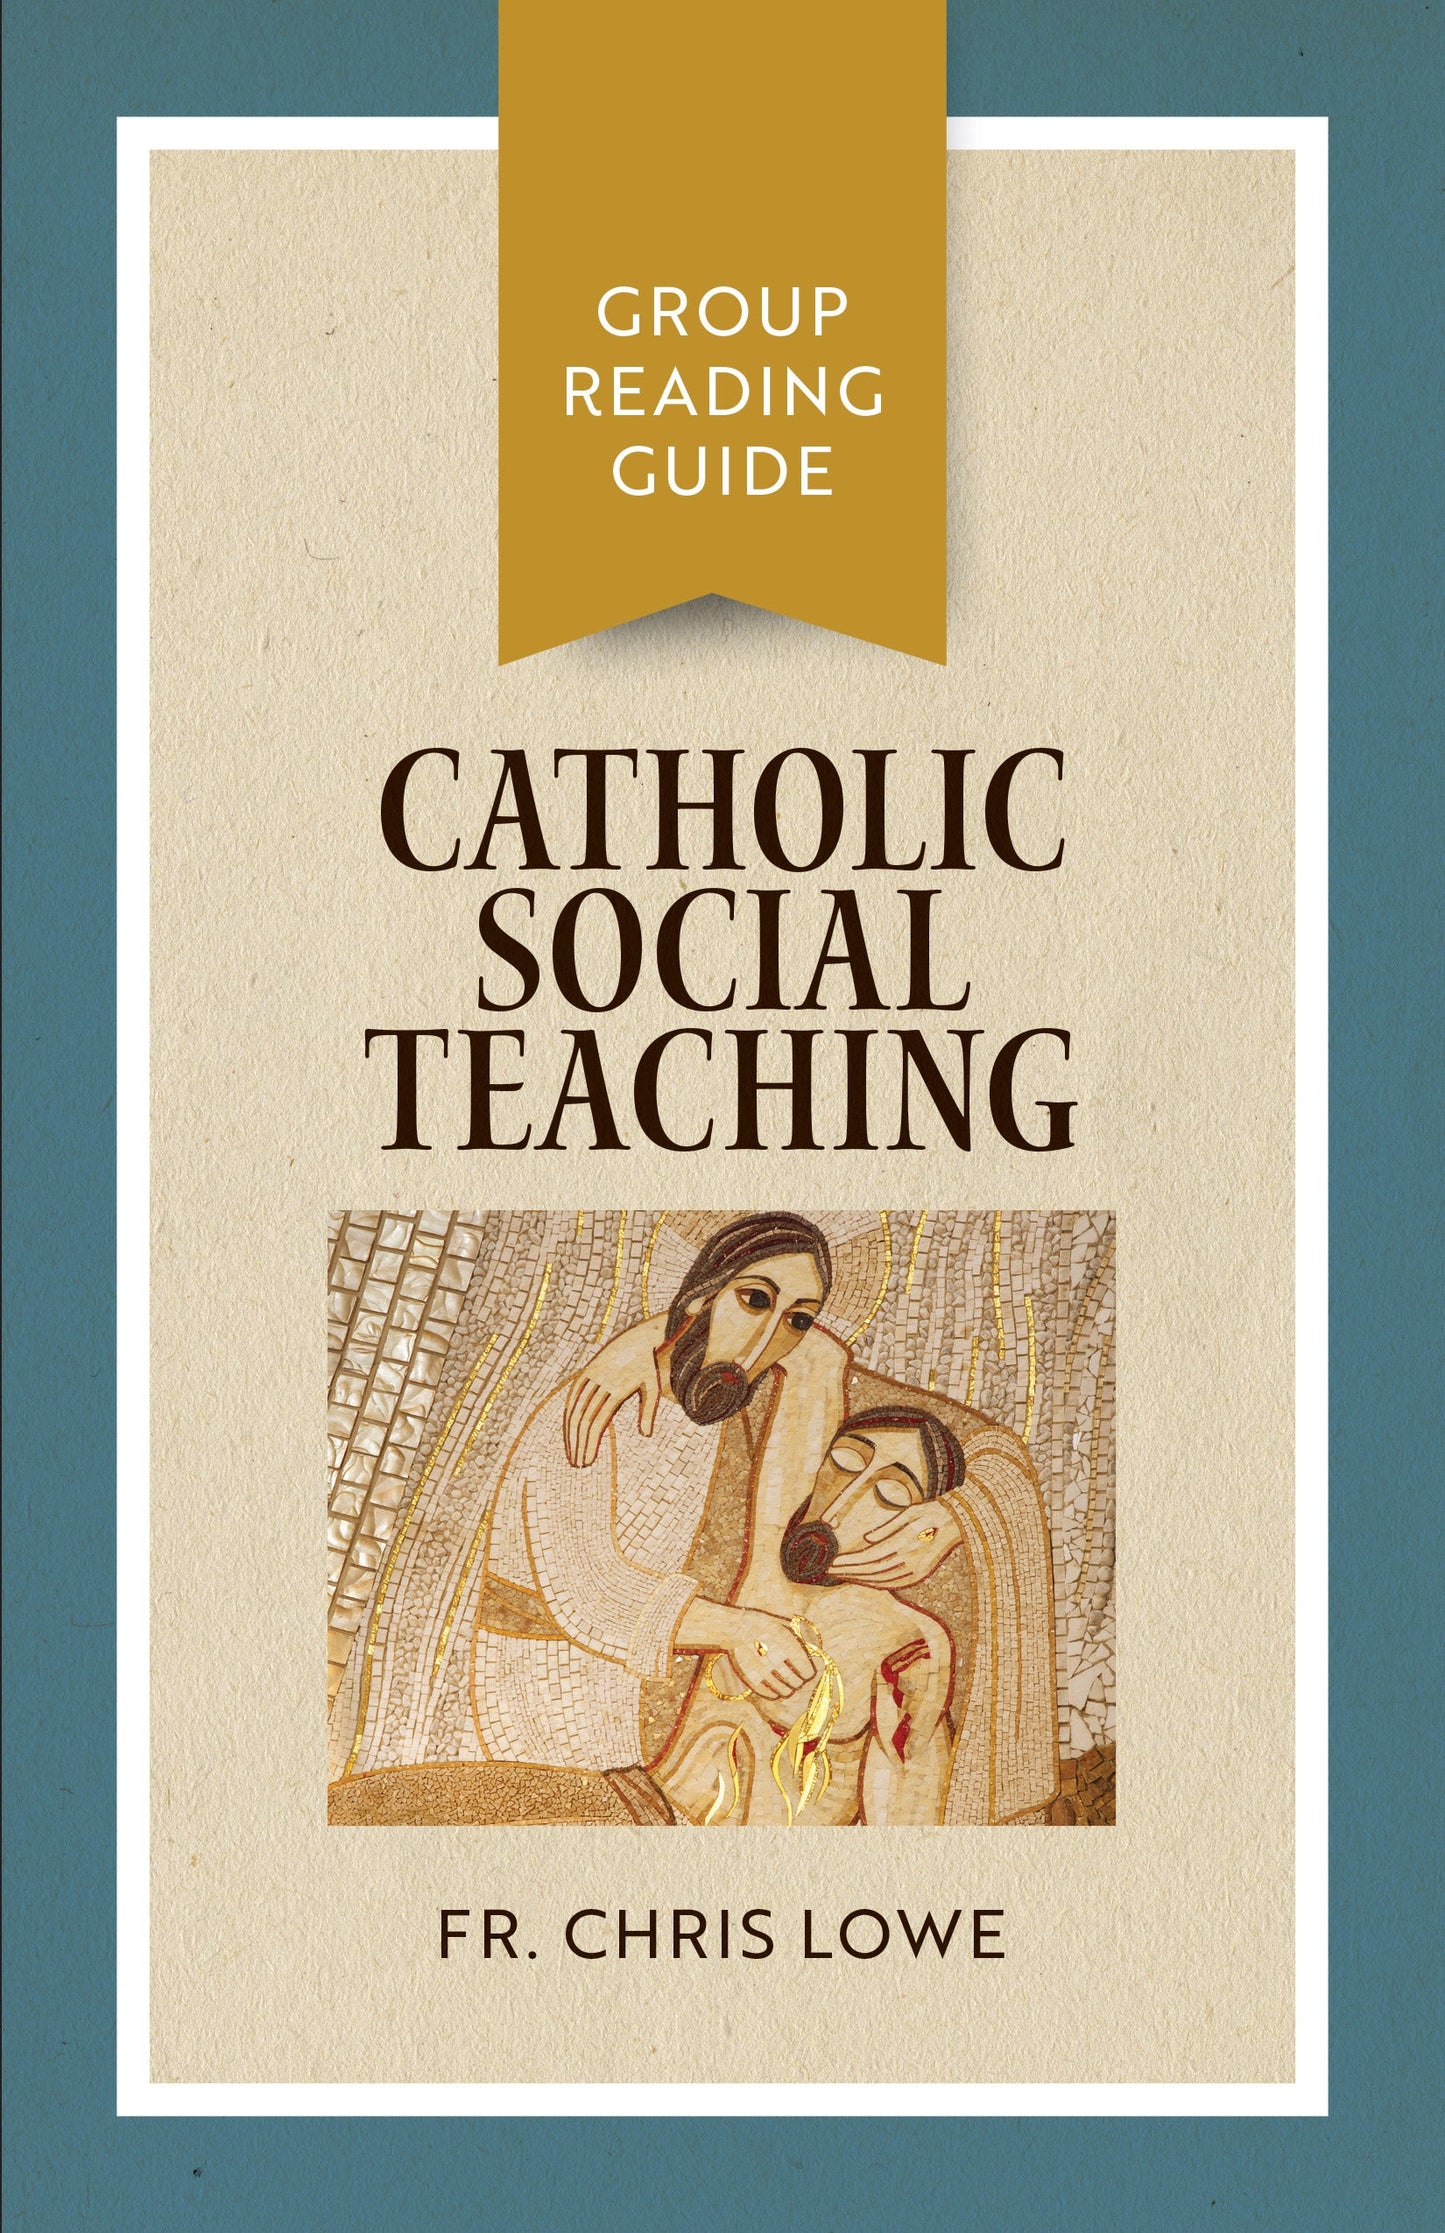 SALE - Catholic Social Teaching Group Reading Guide